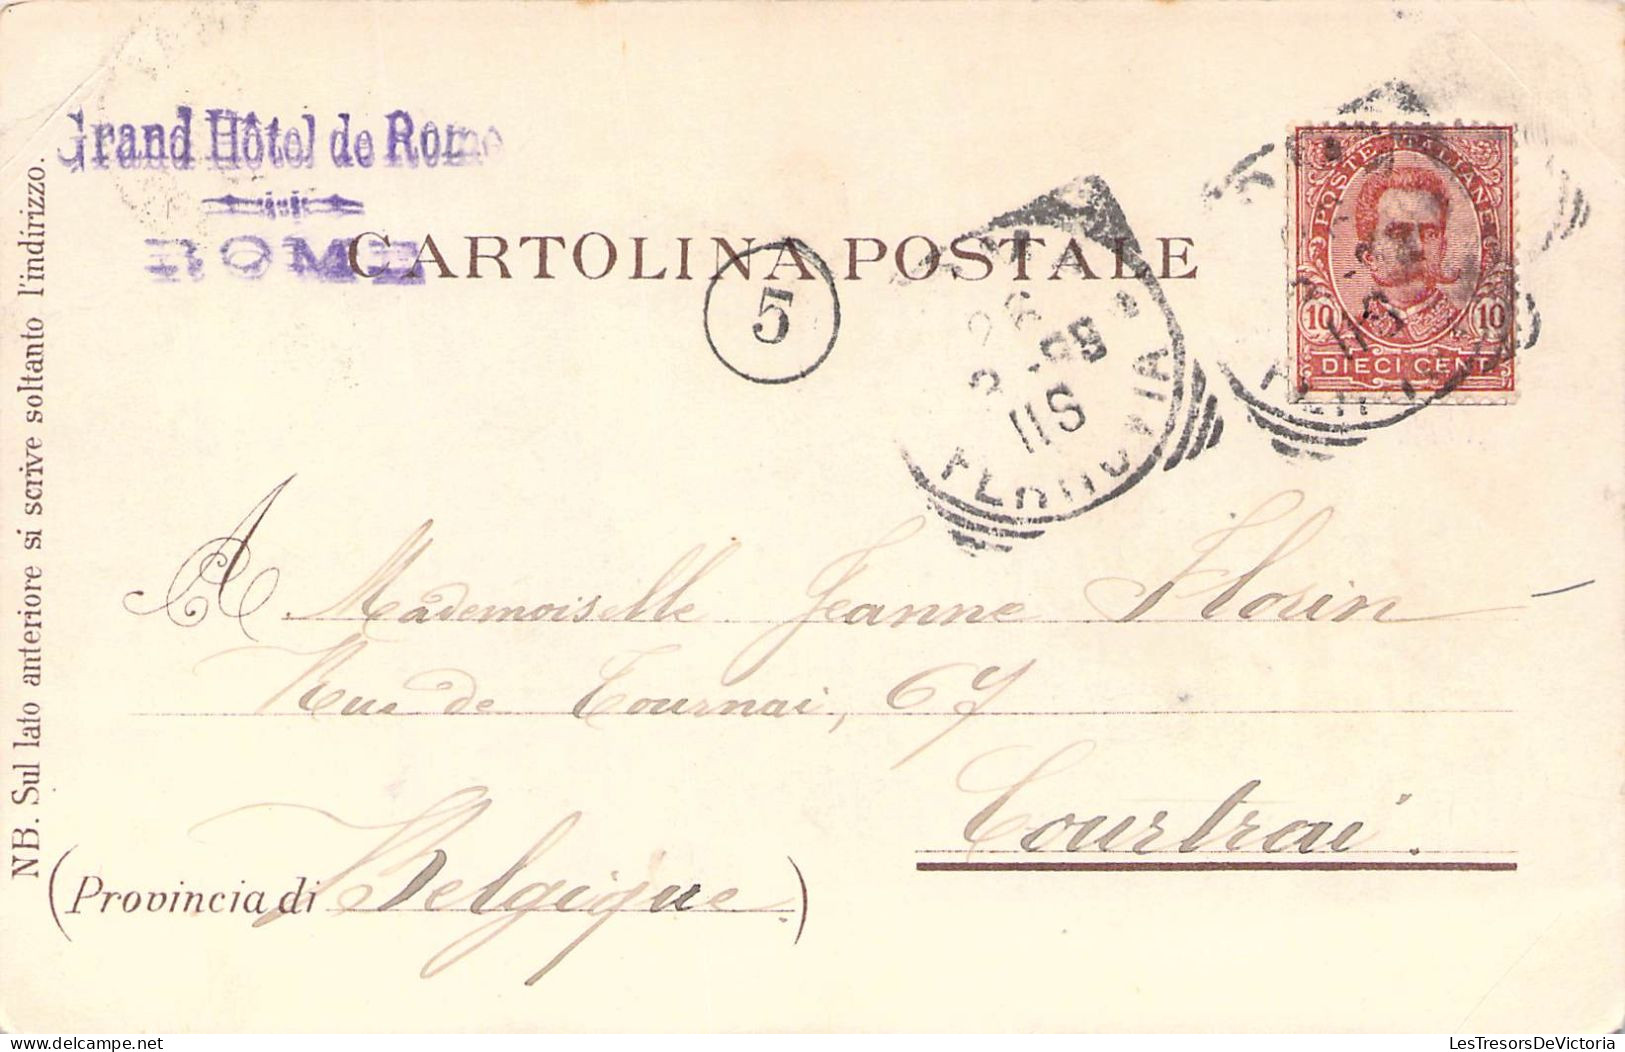 Italie - Ricordo Di Roma - Multivue - Oblitéré 1890 - Colorisé -  Carte Postale Ancienne - Panoramische Zichten, Meerdere Zichten